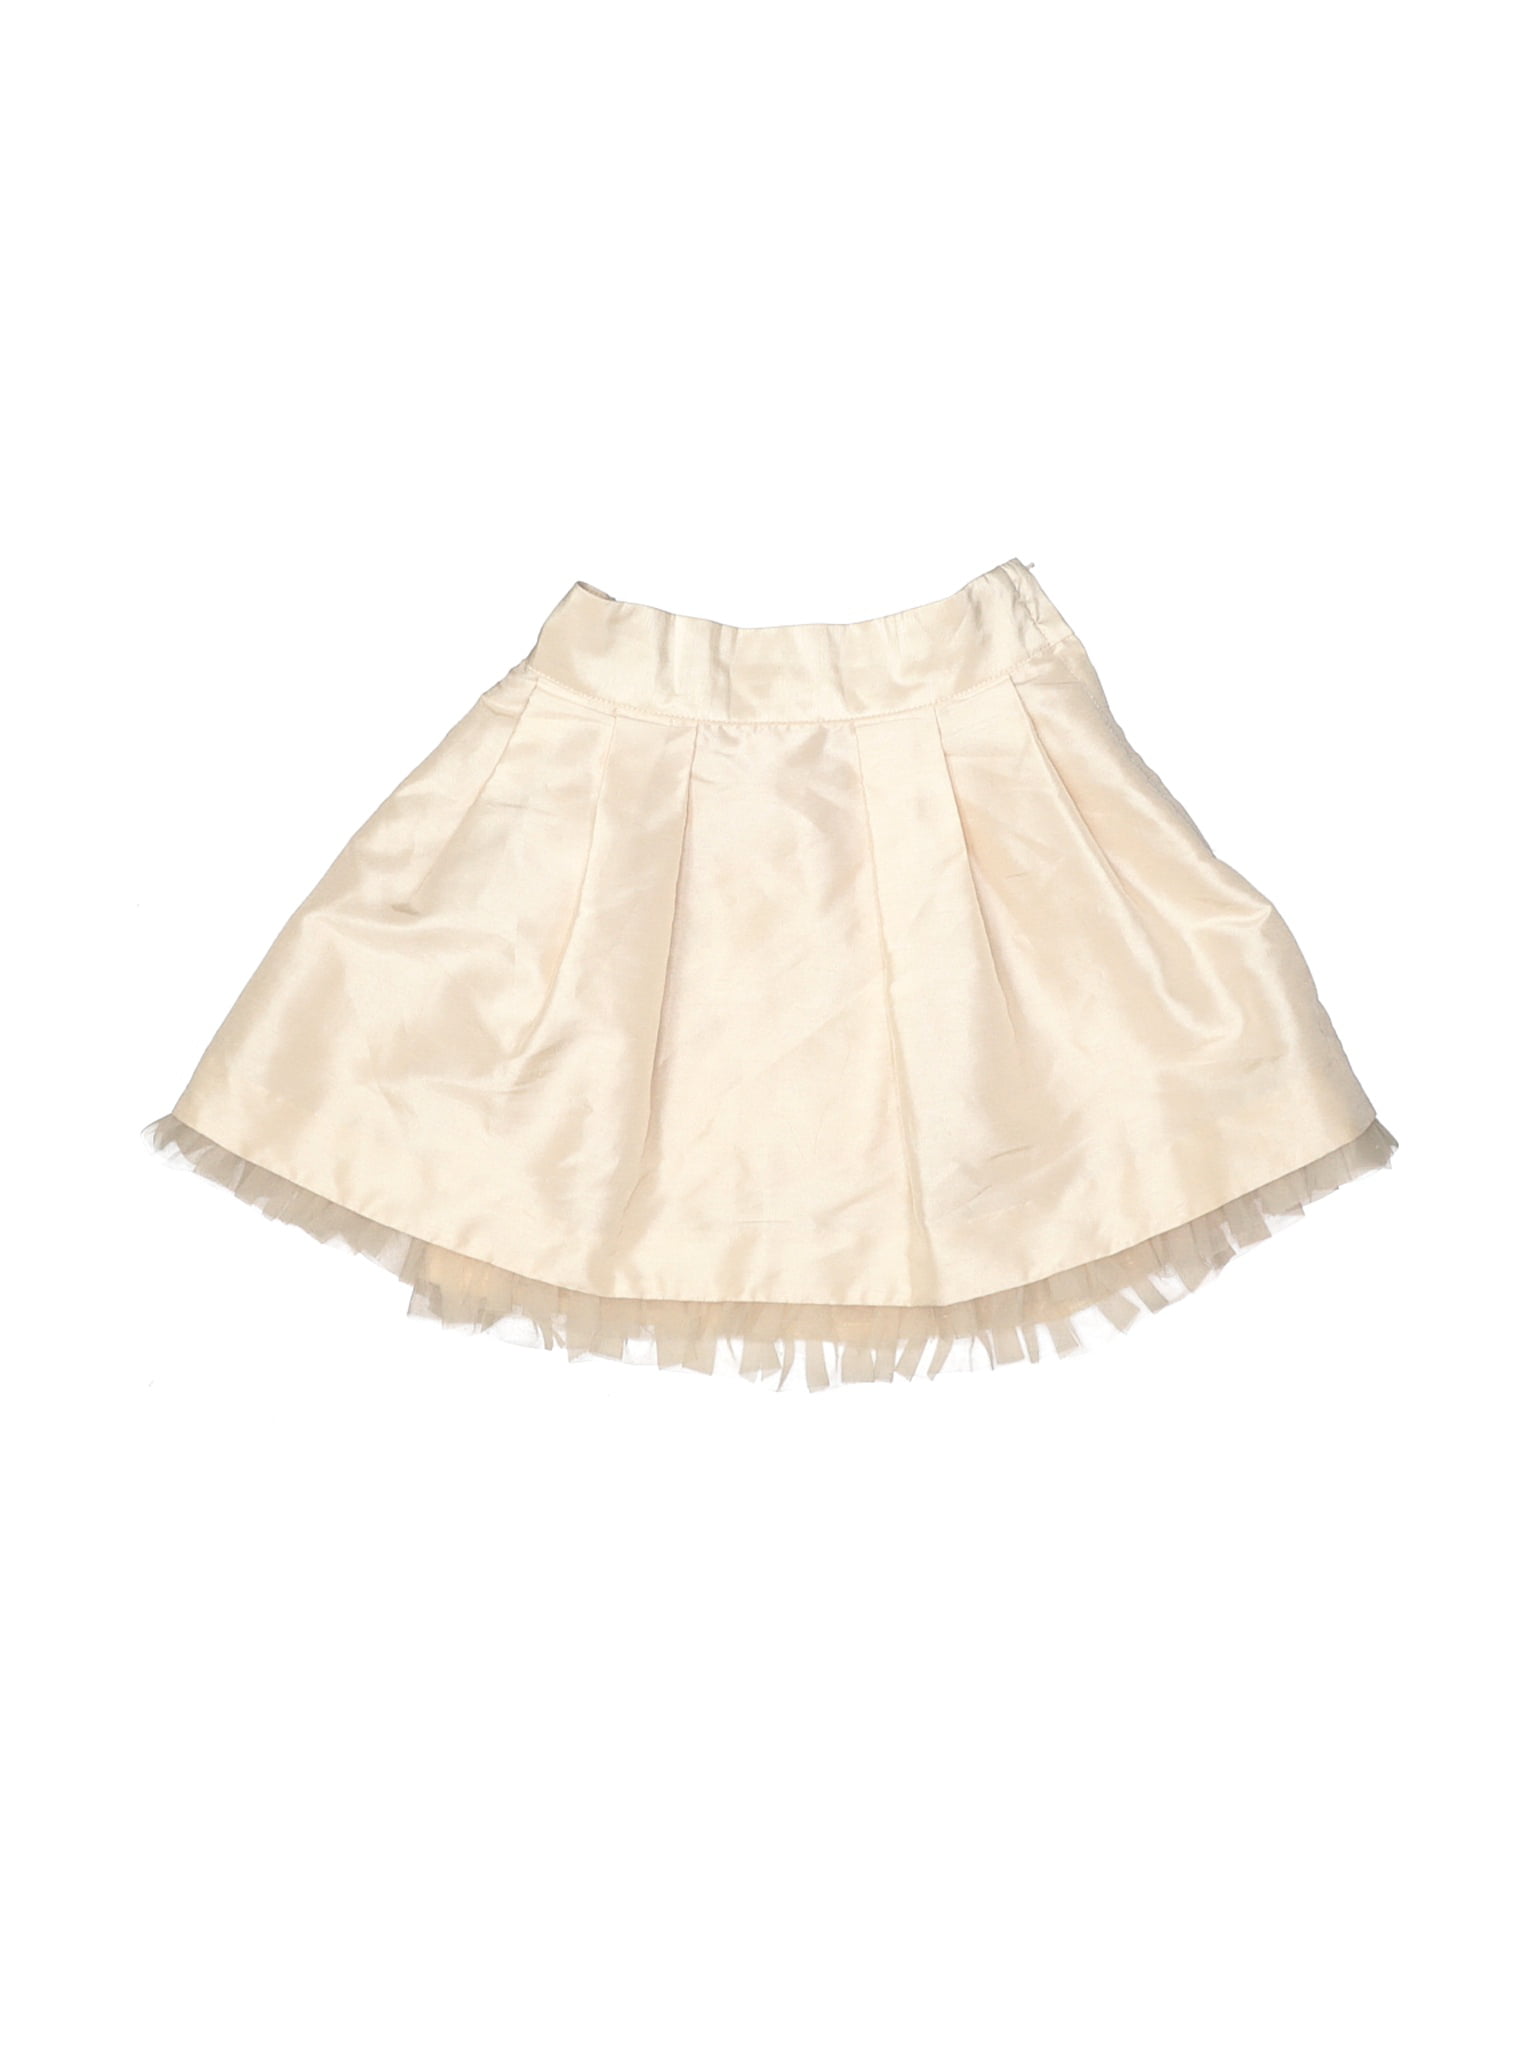 MaeLi Rose Ruffle Demin Skirt and Overlay Bubble Top 6/6X 